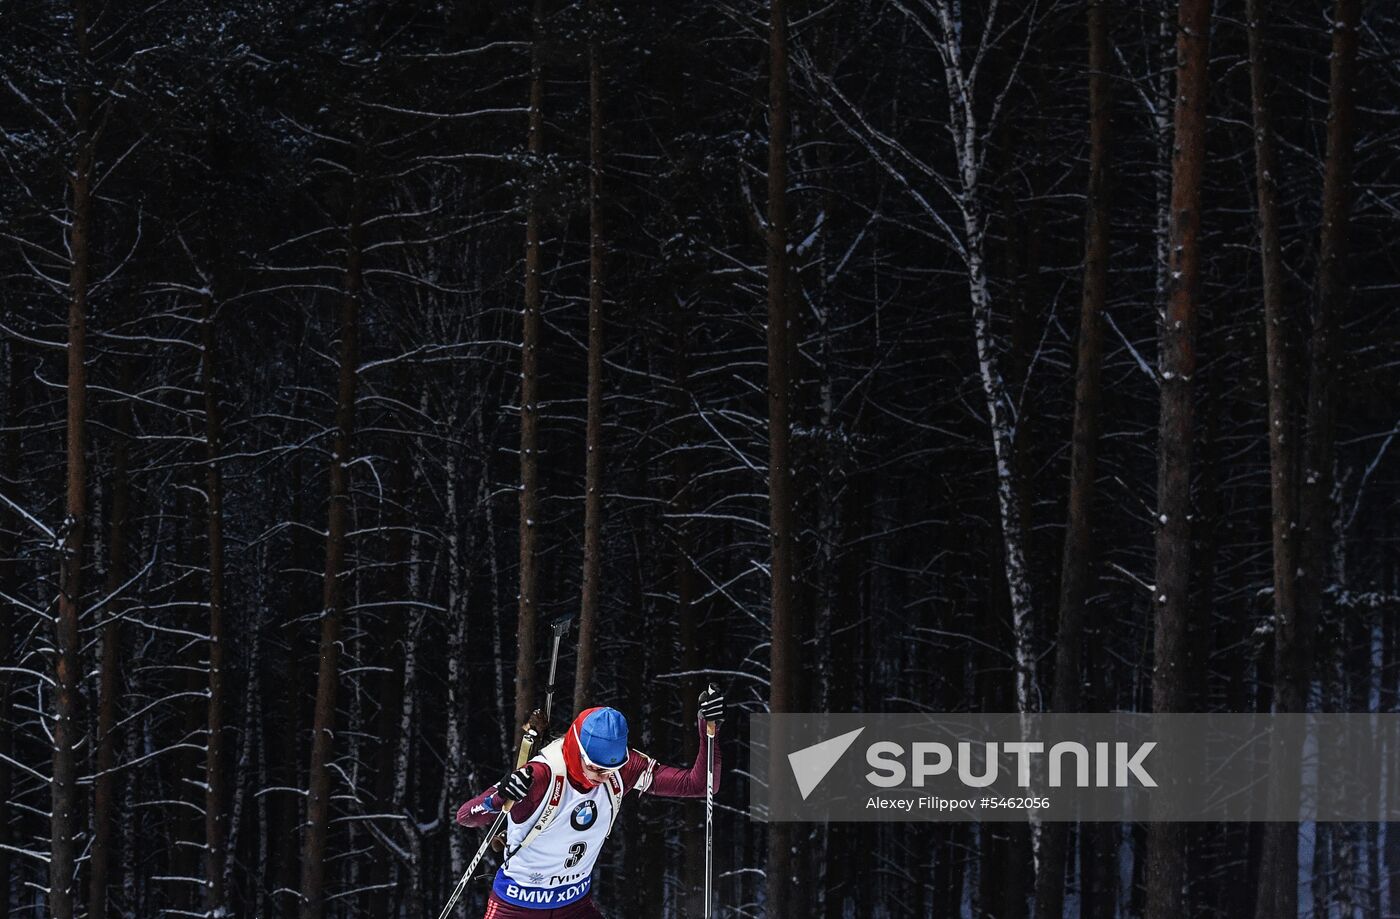 IBU World Cup 9. Biathlon. Women's sprint